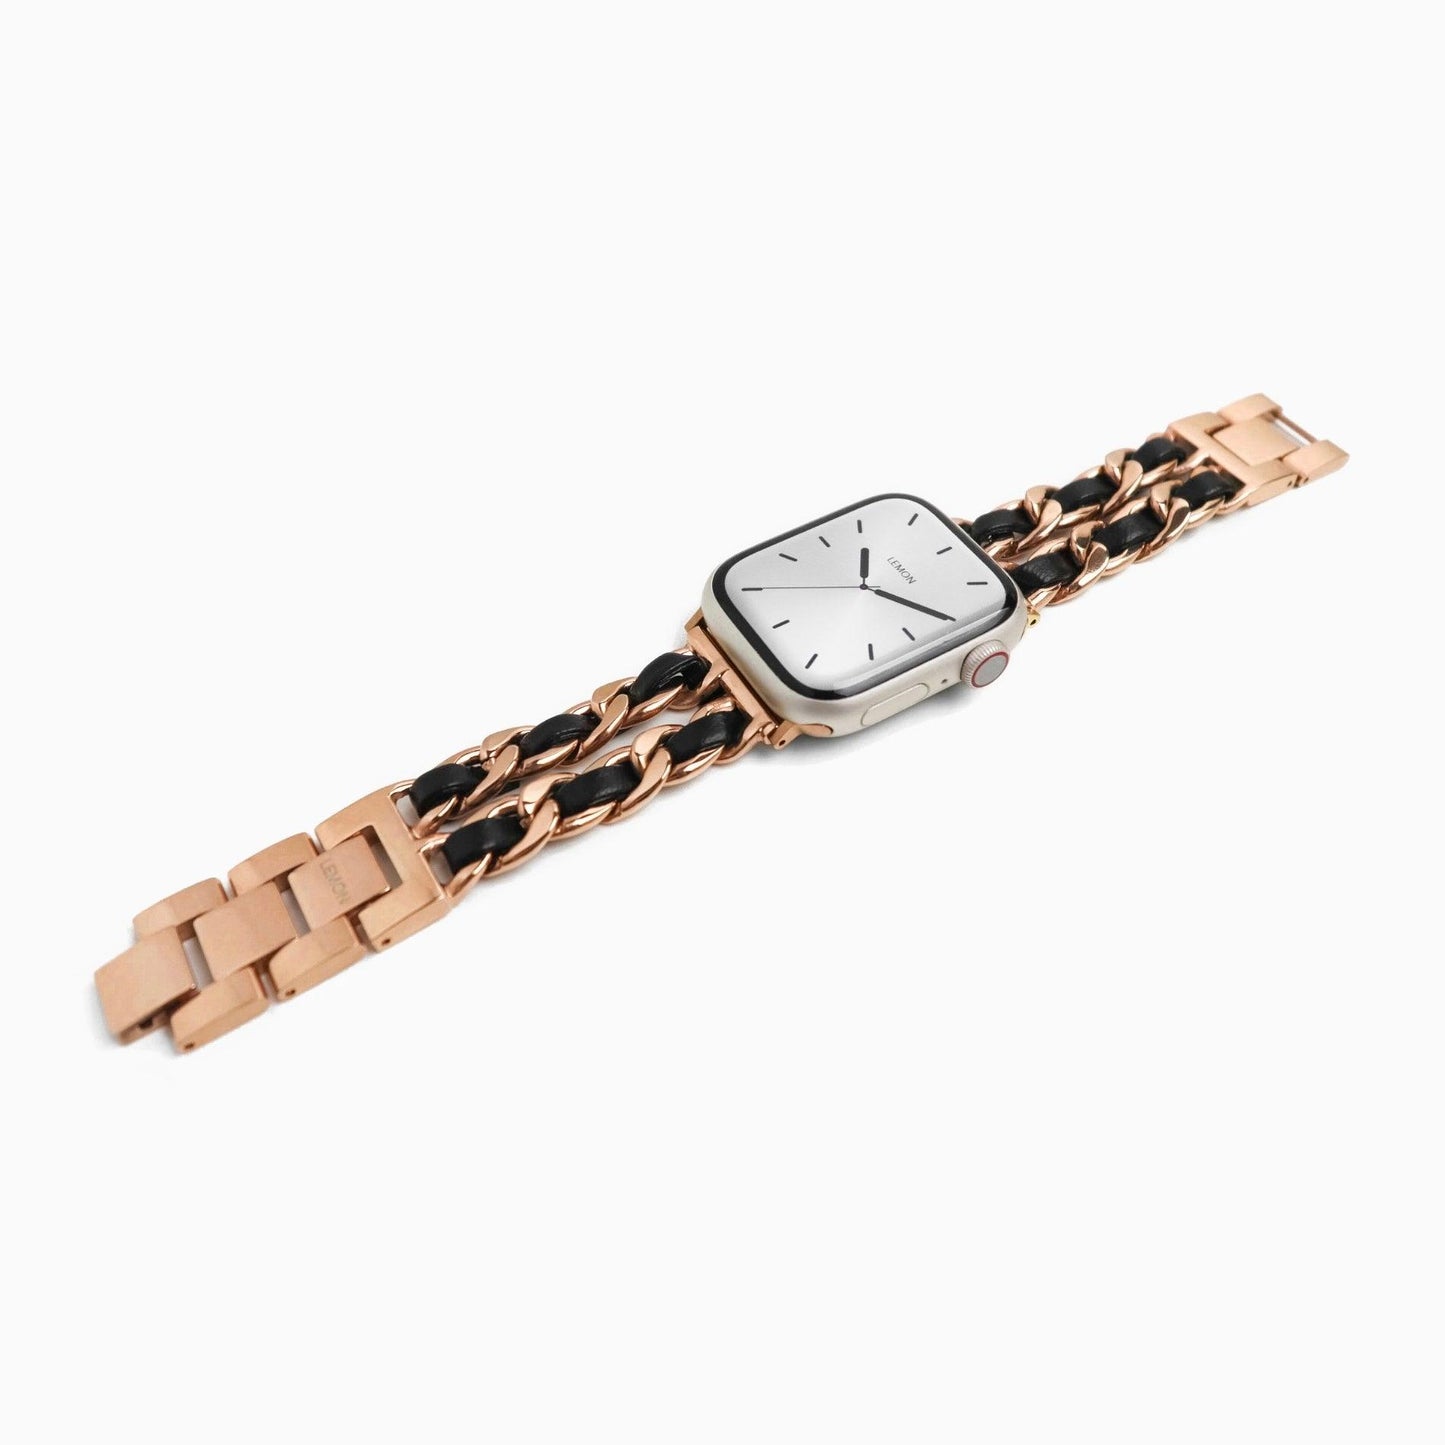 (St-Steel) Paris Night Apple Watch Bracelet - 18k Rose Gold Plated